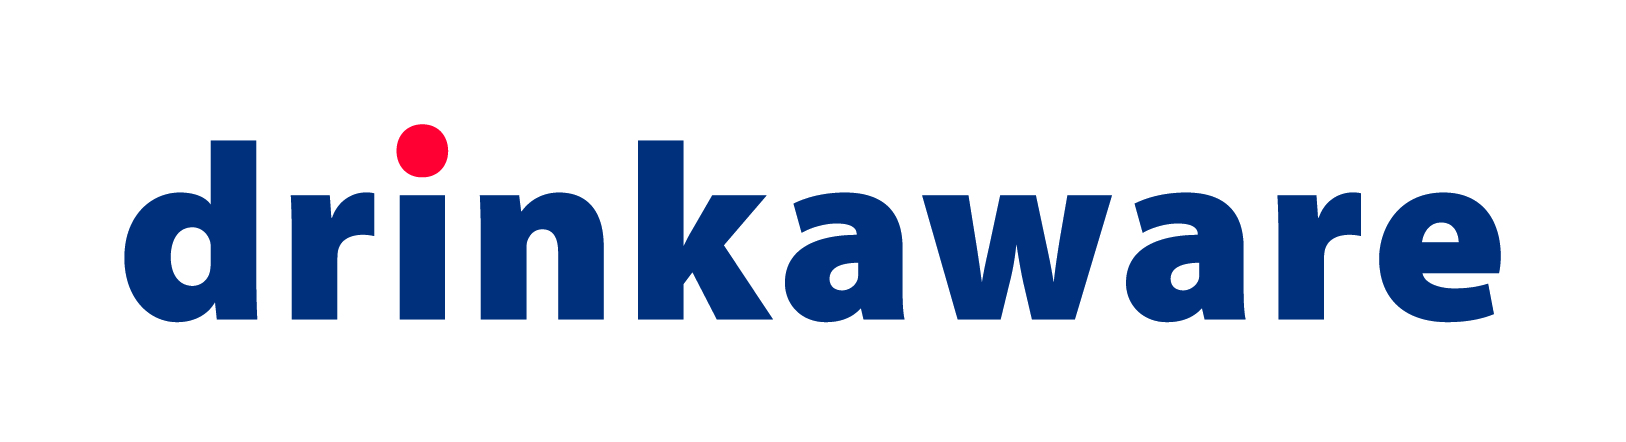 Drinkaware unveils new organisational strategy